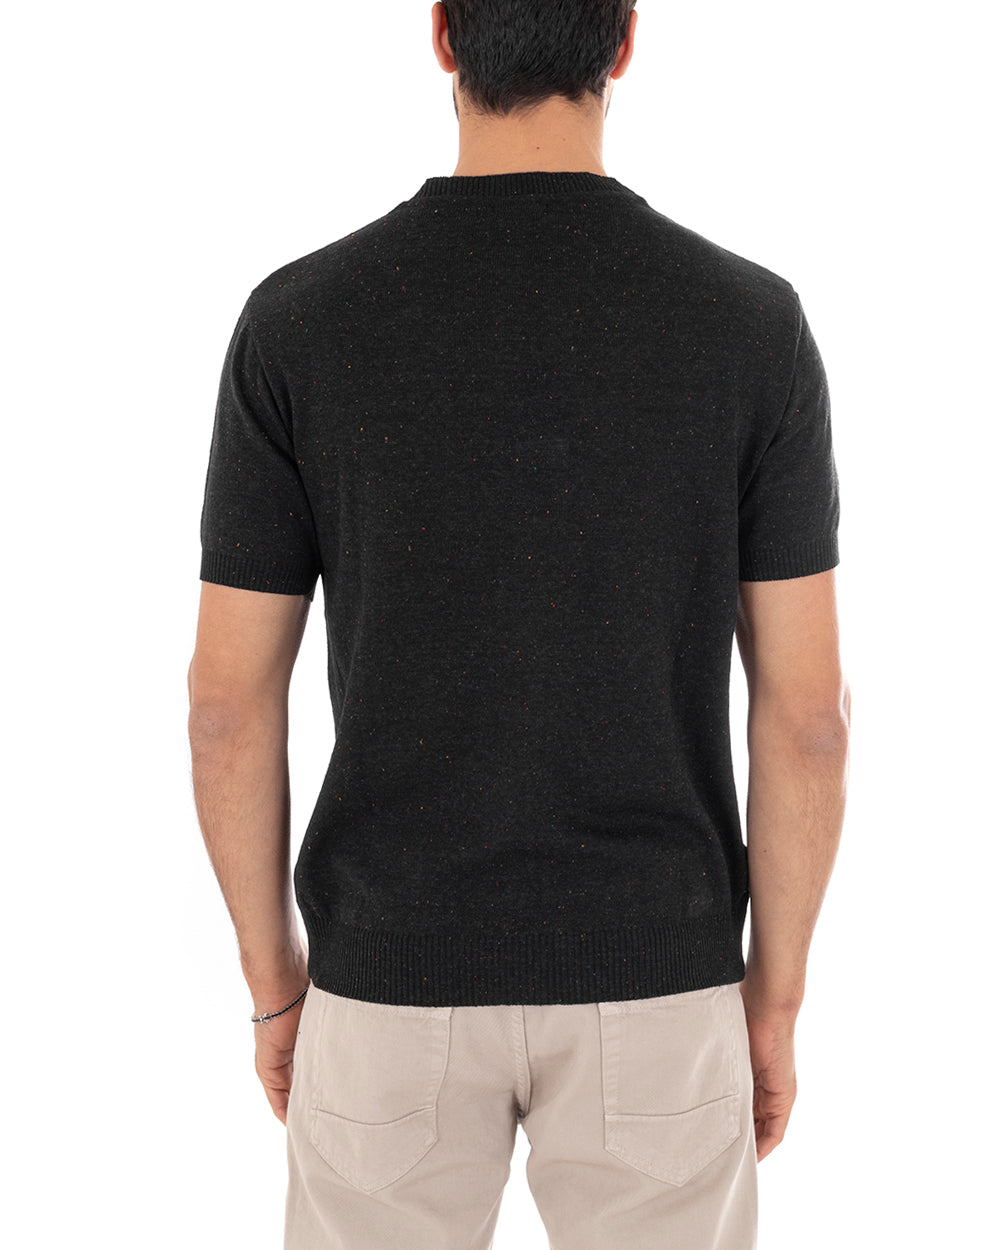 Men's T-shirt Short Sleeve Dotted Melange Casual Black Round Neck Thread GIOSAL